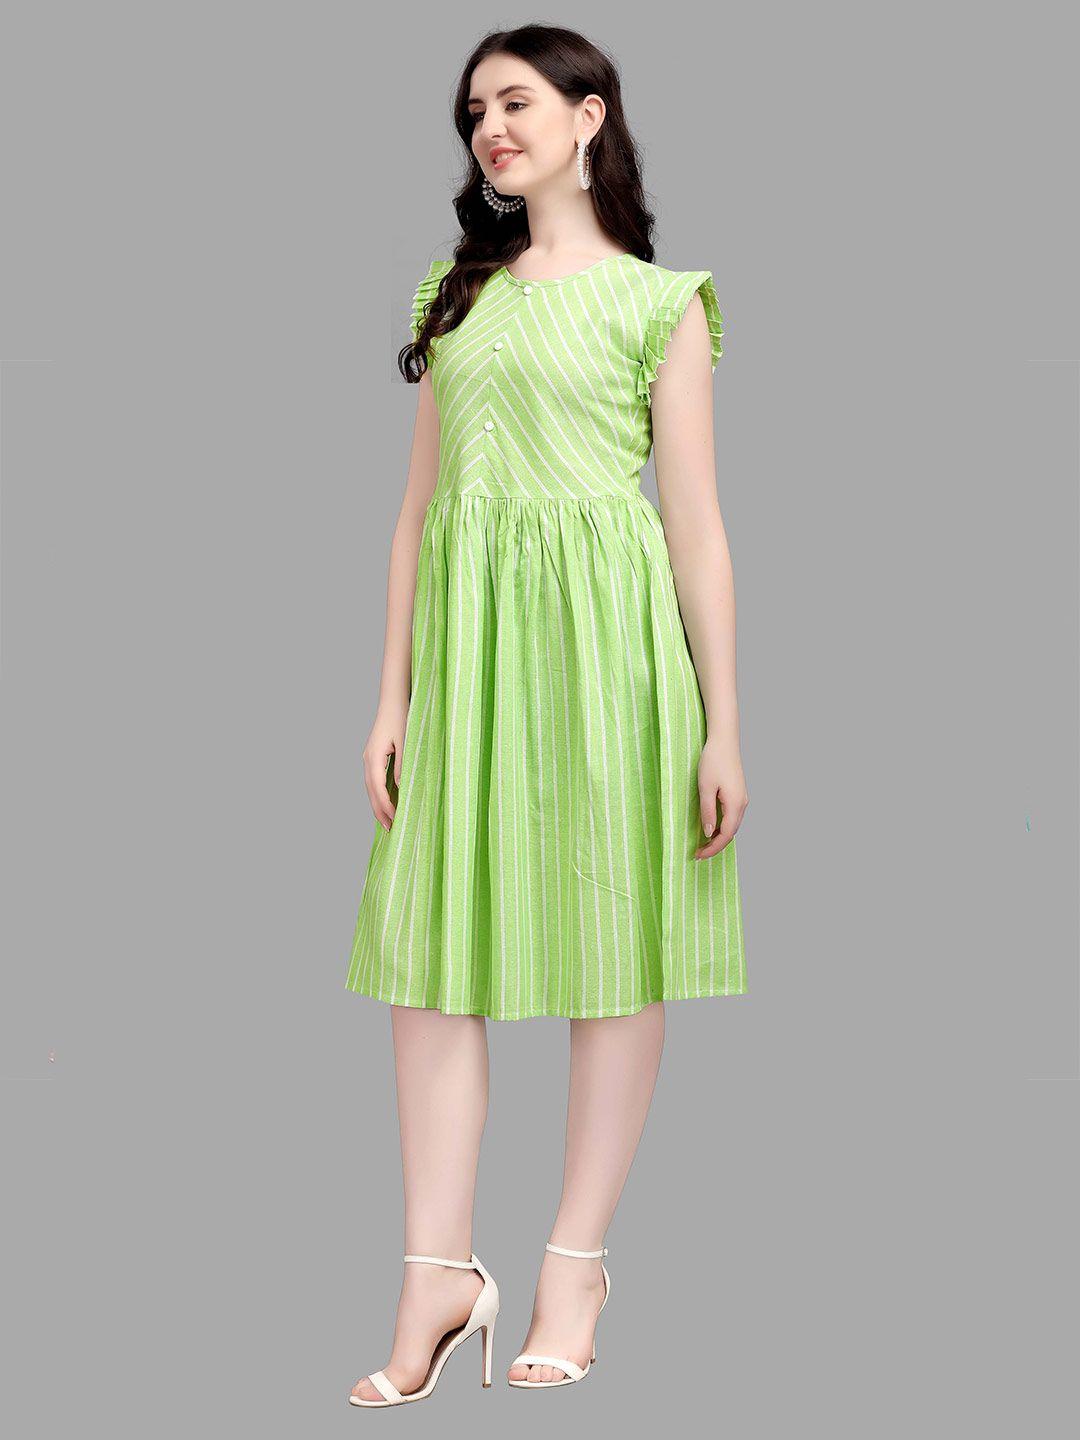 kinjo women lime green & white striped fit & flare dress